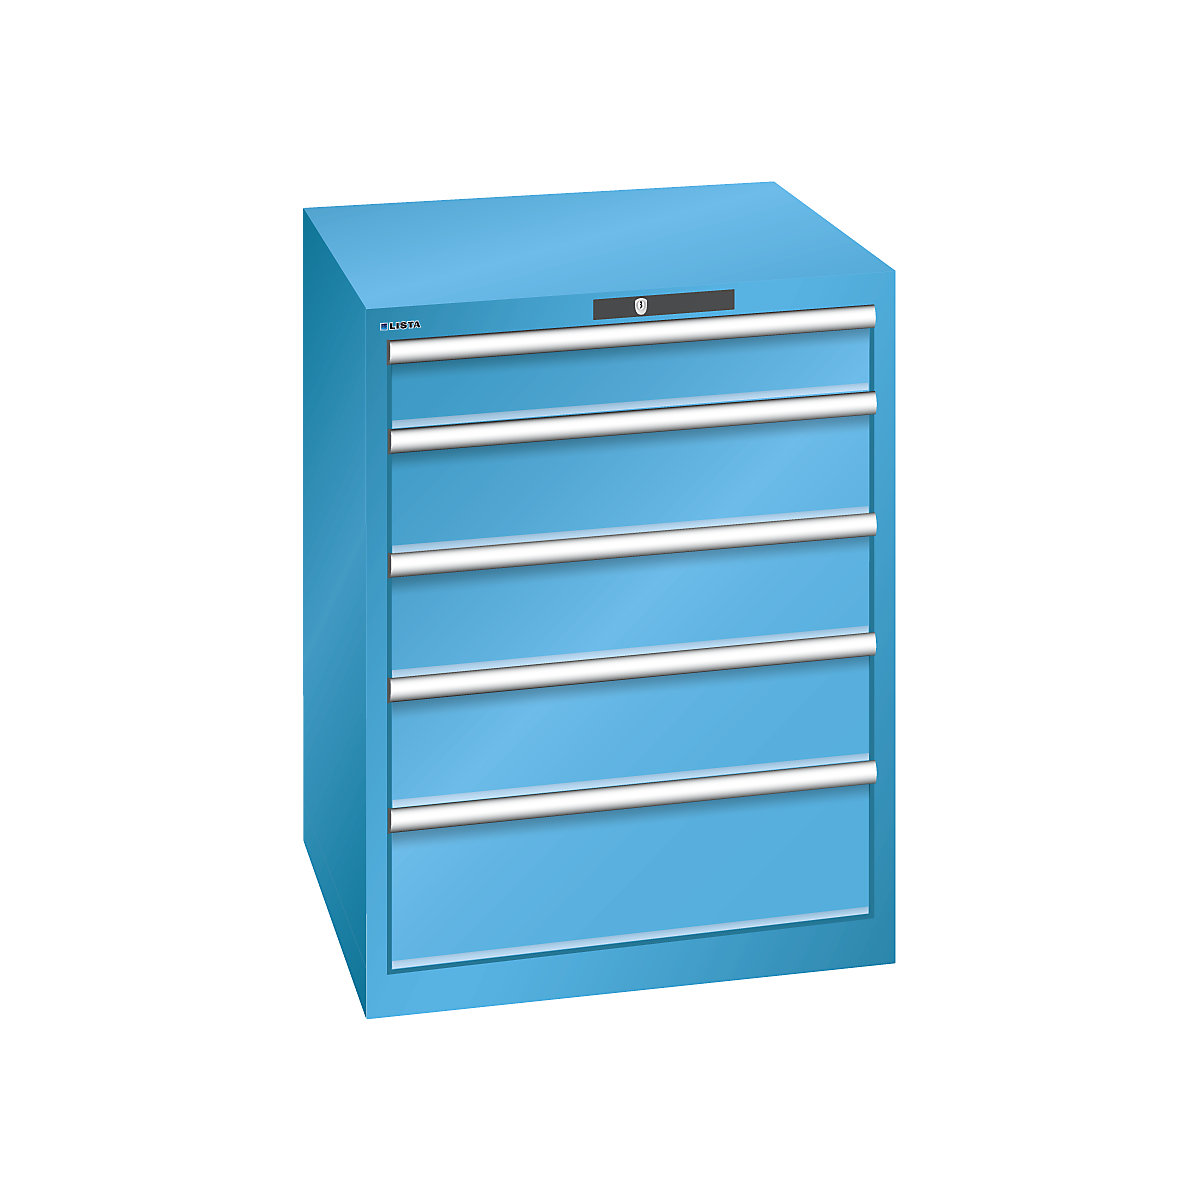 Drawer cupboard, 5 drawers – LISTA, WxDxH 717 x 725 x 850 mm, light blue, max. drawer load 200 kg-1